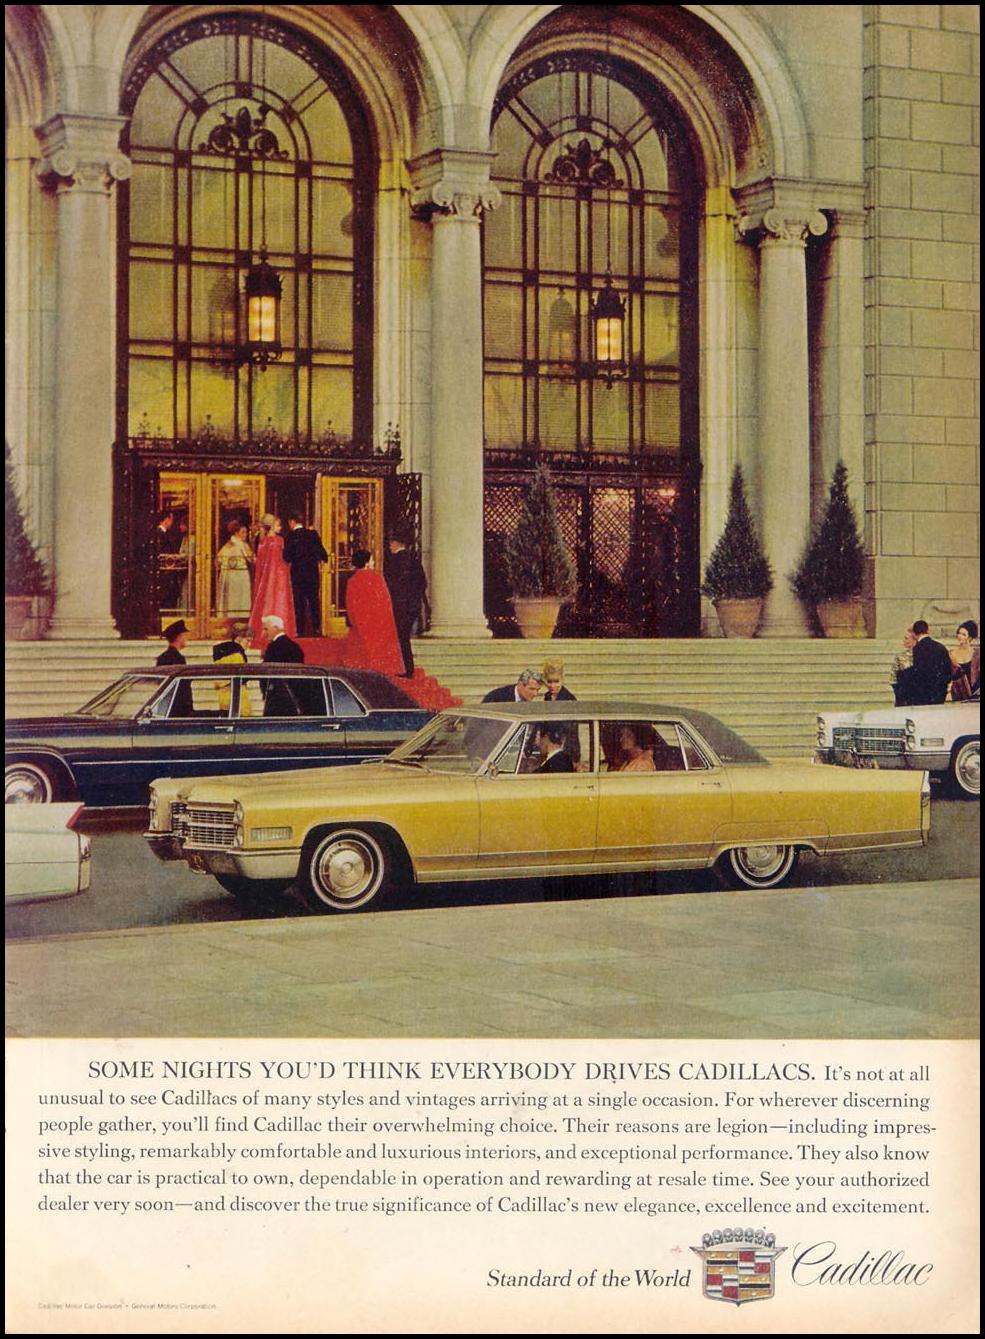 CADILLAC AUTOMOBILES
TIME
03/11/1966
p. 47